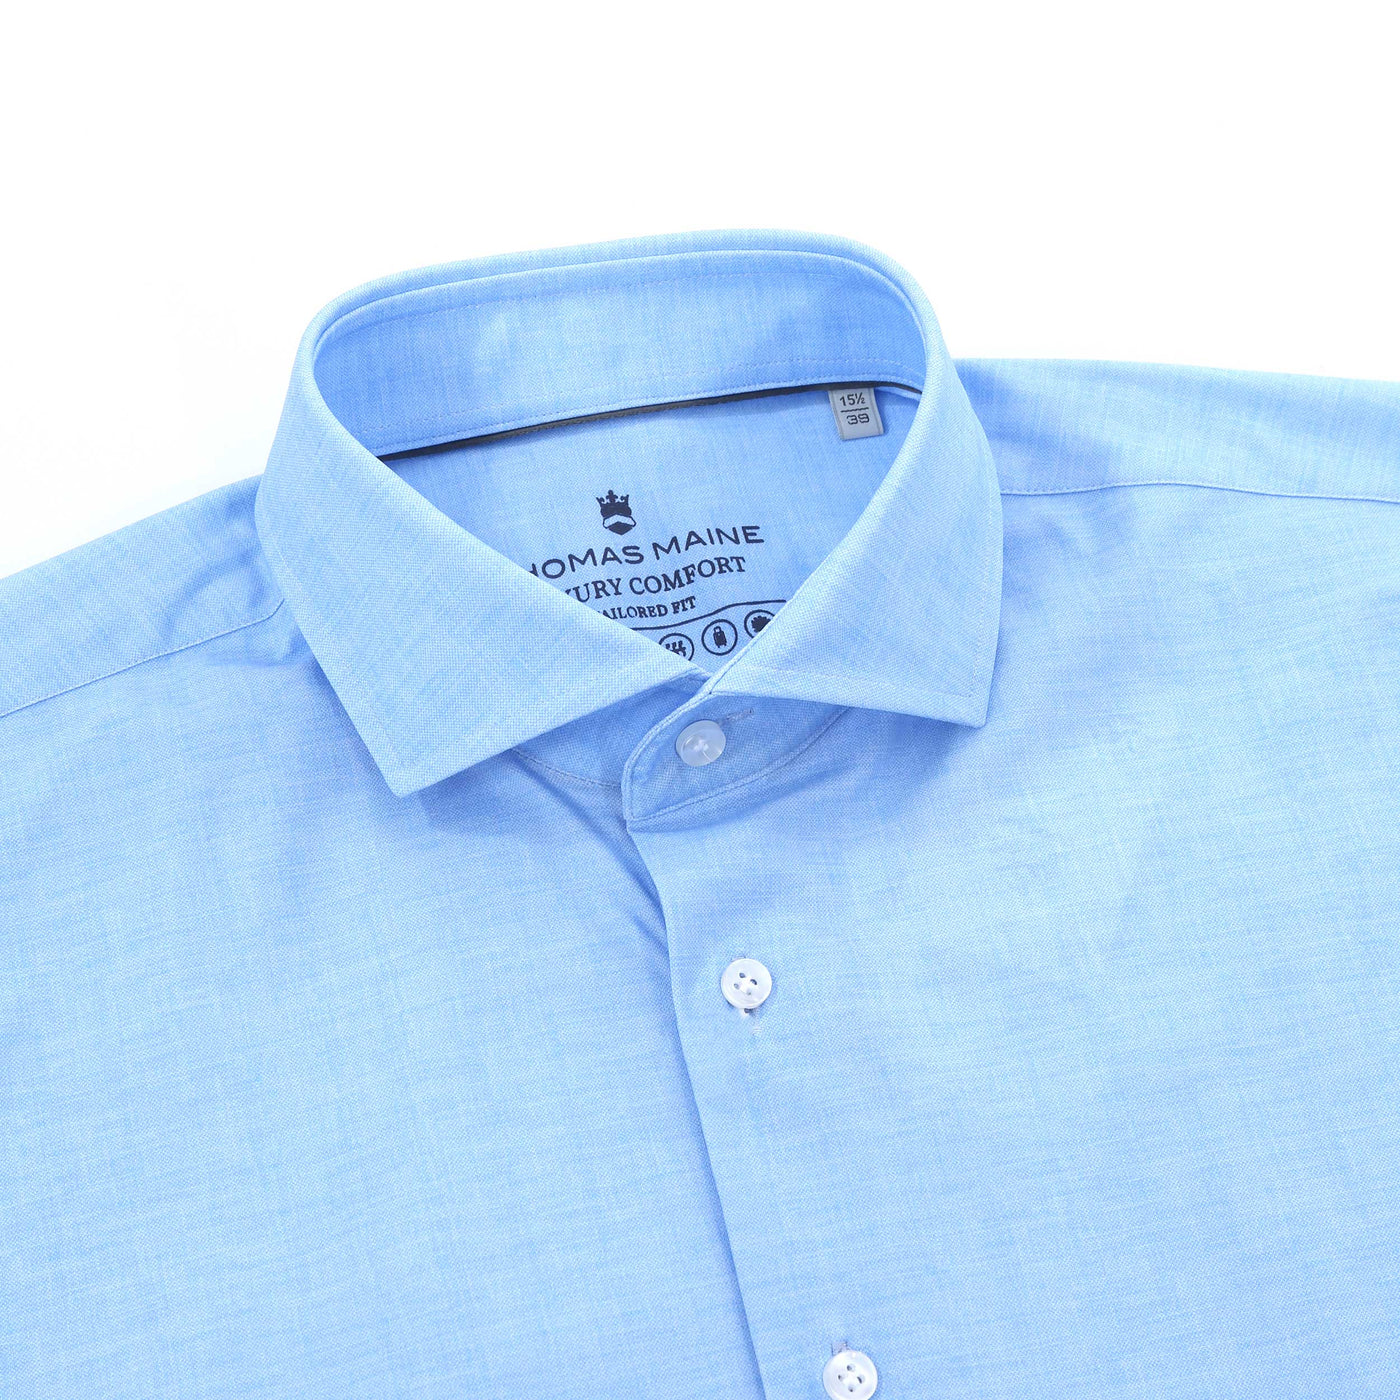 Thomas Maine Canclini Stretch Shirt in Sky Blue Collar